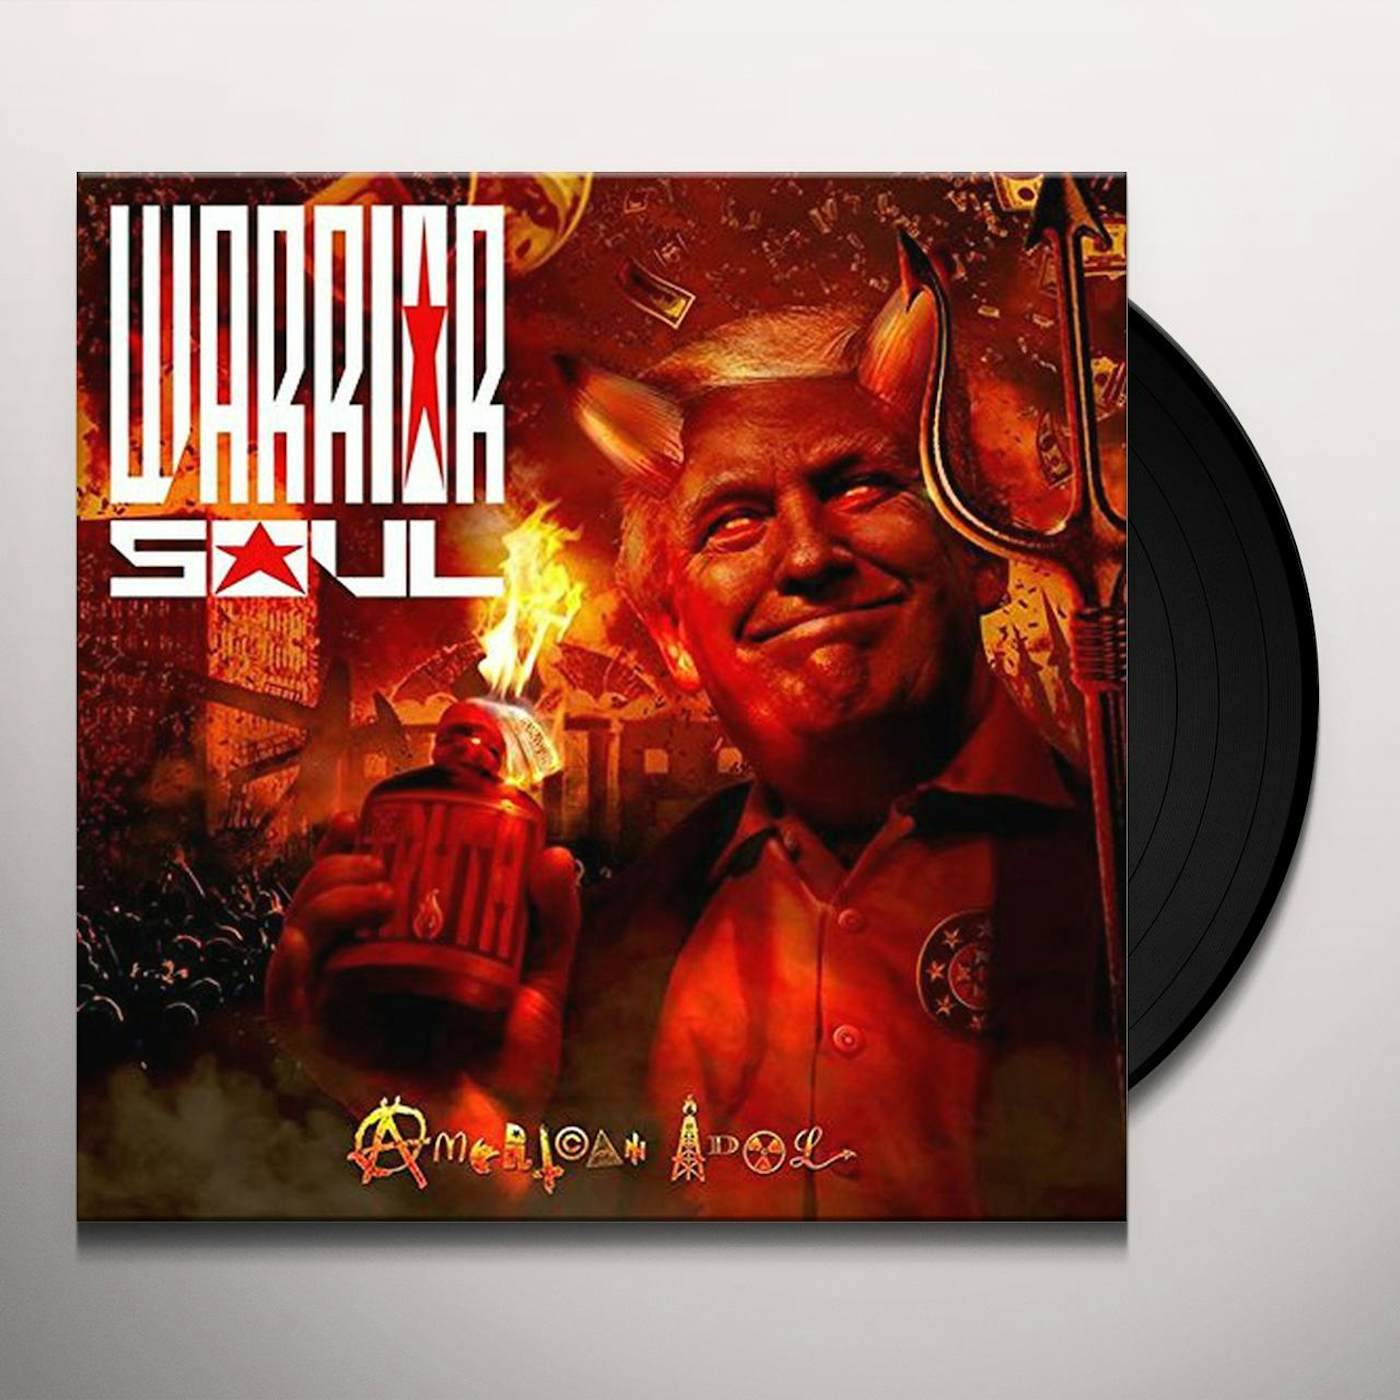 Warrior Soul BACK ON THE LASH (AMERICAN IDOL SLEEVE) Vinyl Record